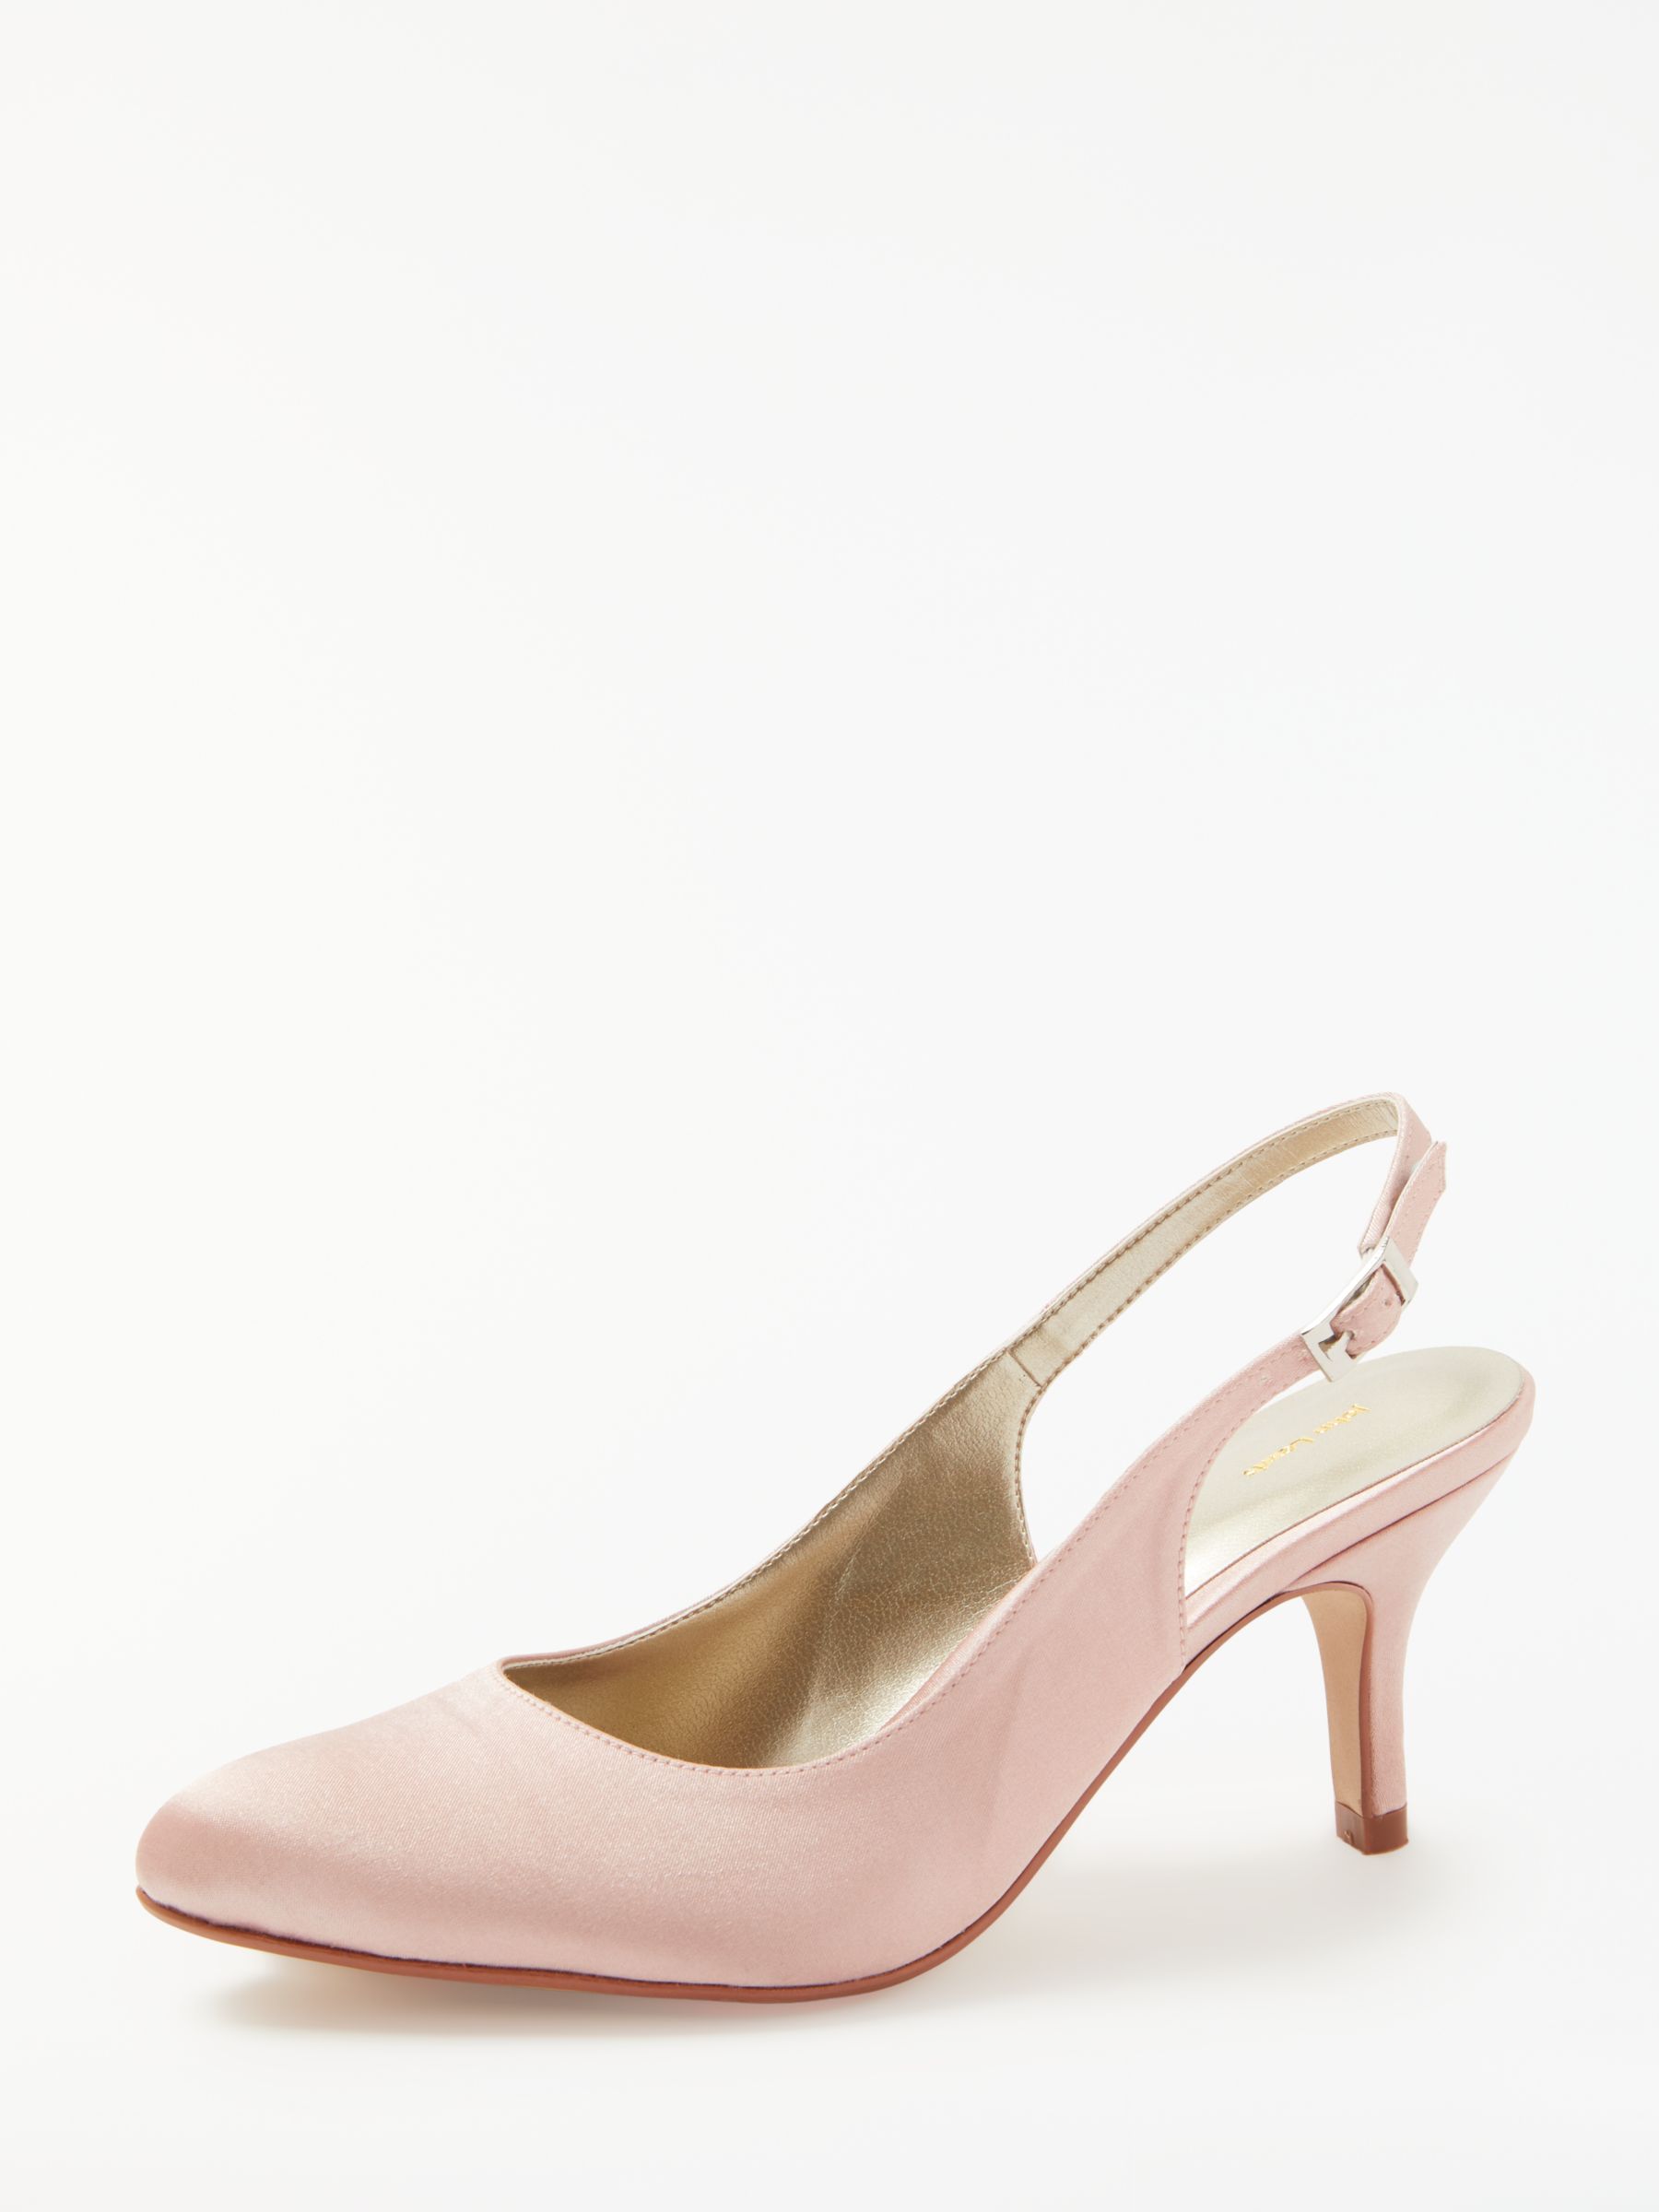 John Lewis & Partners Demi Bow Slingback Court Shoes, Pink